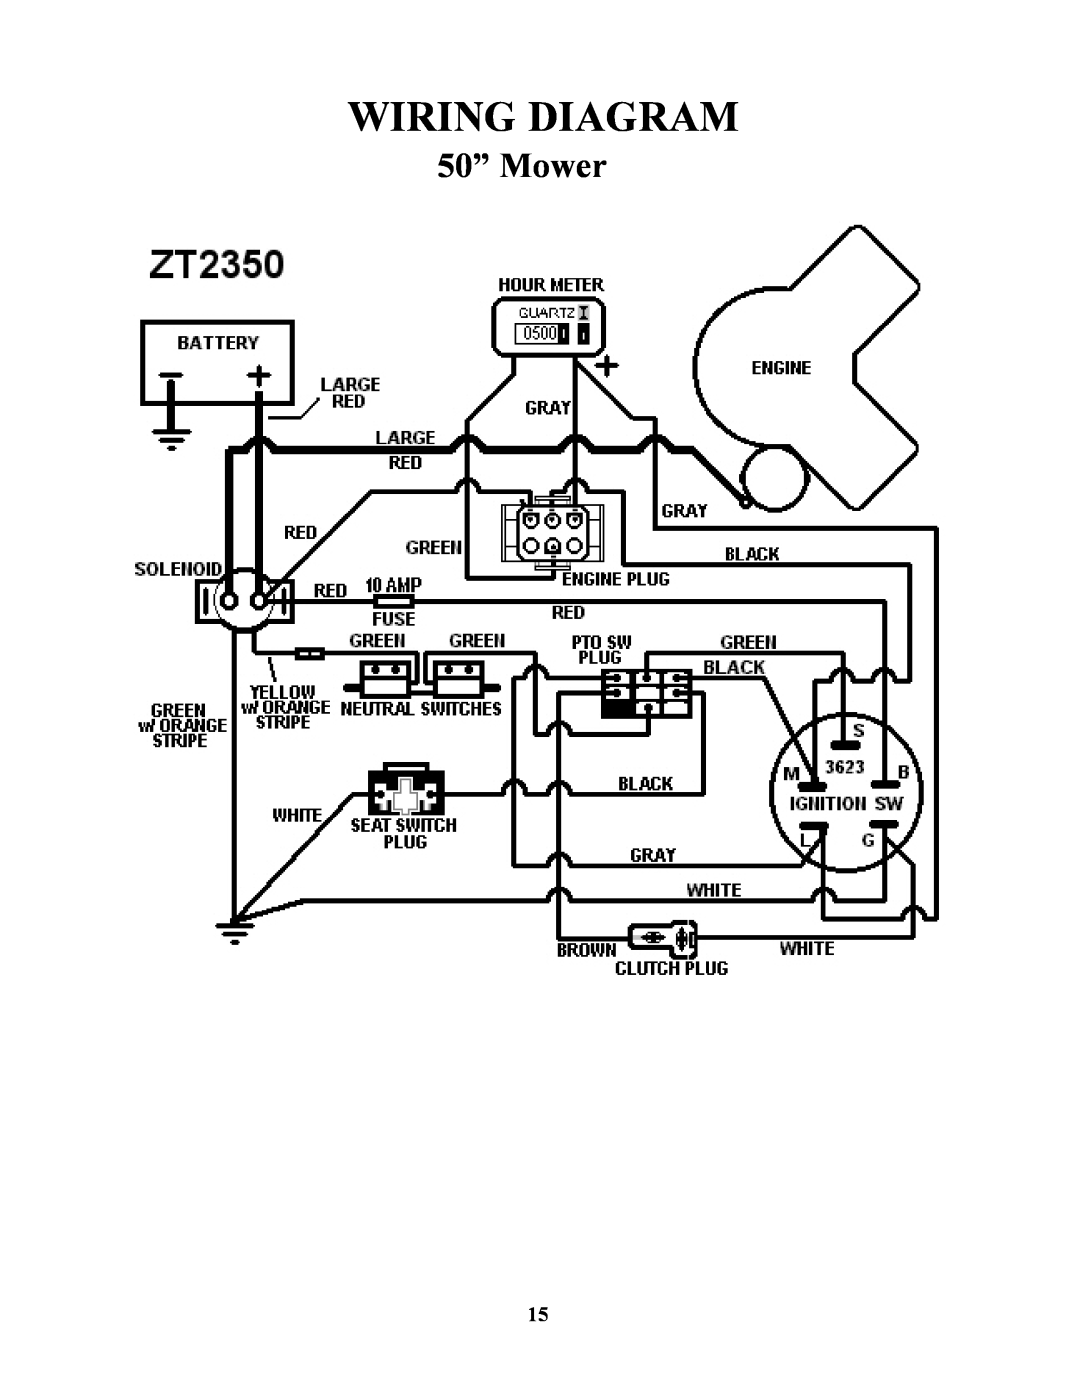 Swisher ZT2350 owner manual Wiring Diagram, 50” Mower 